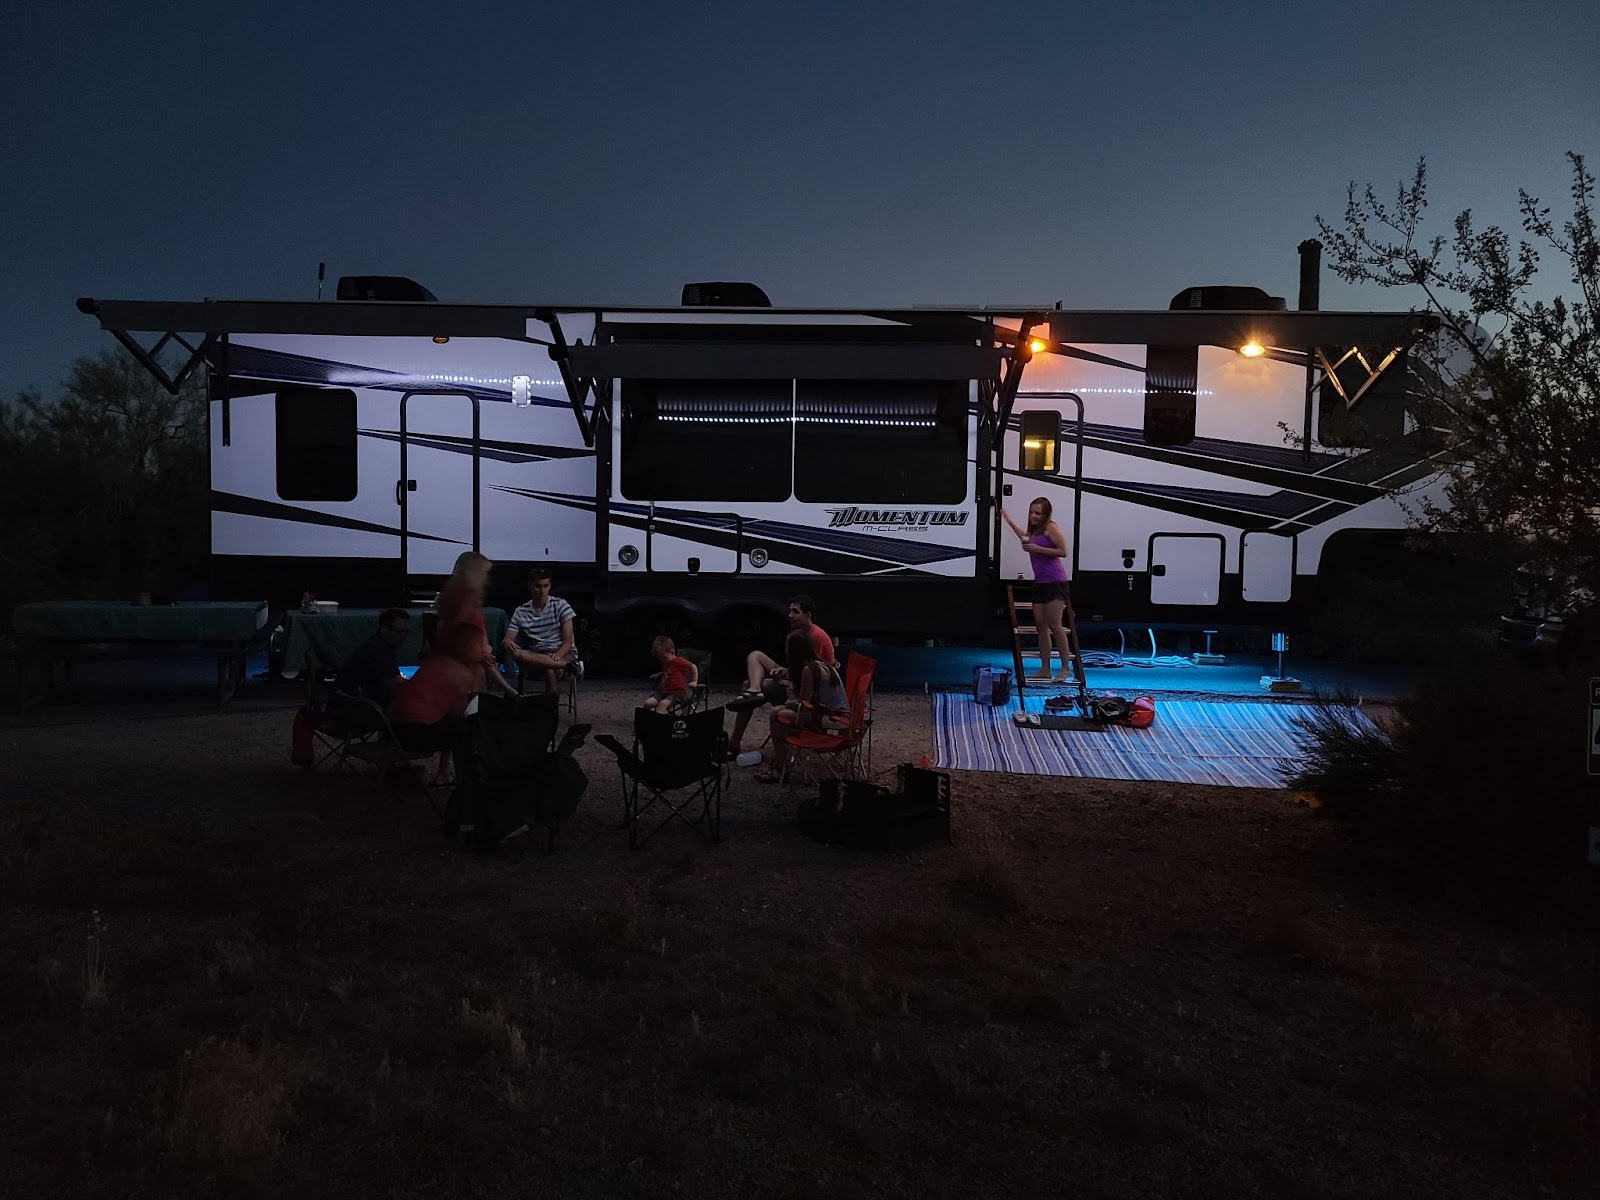 Fifth wheel dry camping on a septmber night 
(https://unsplash.com/photos/wdc70Bejov8)